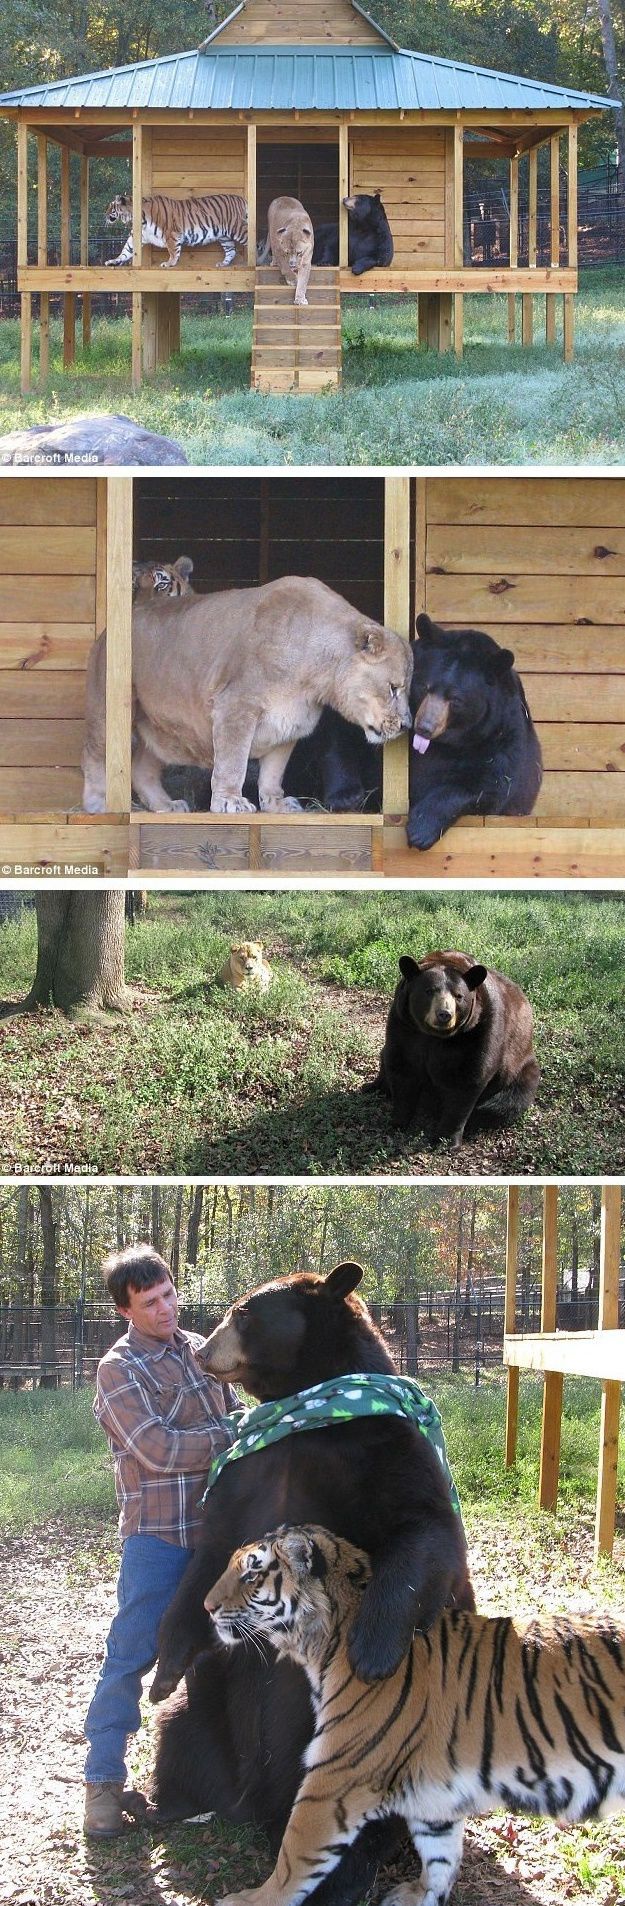 Strange and Improbably Animal Friendships!